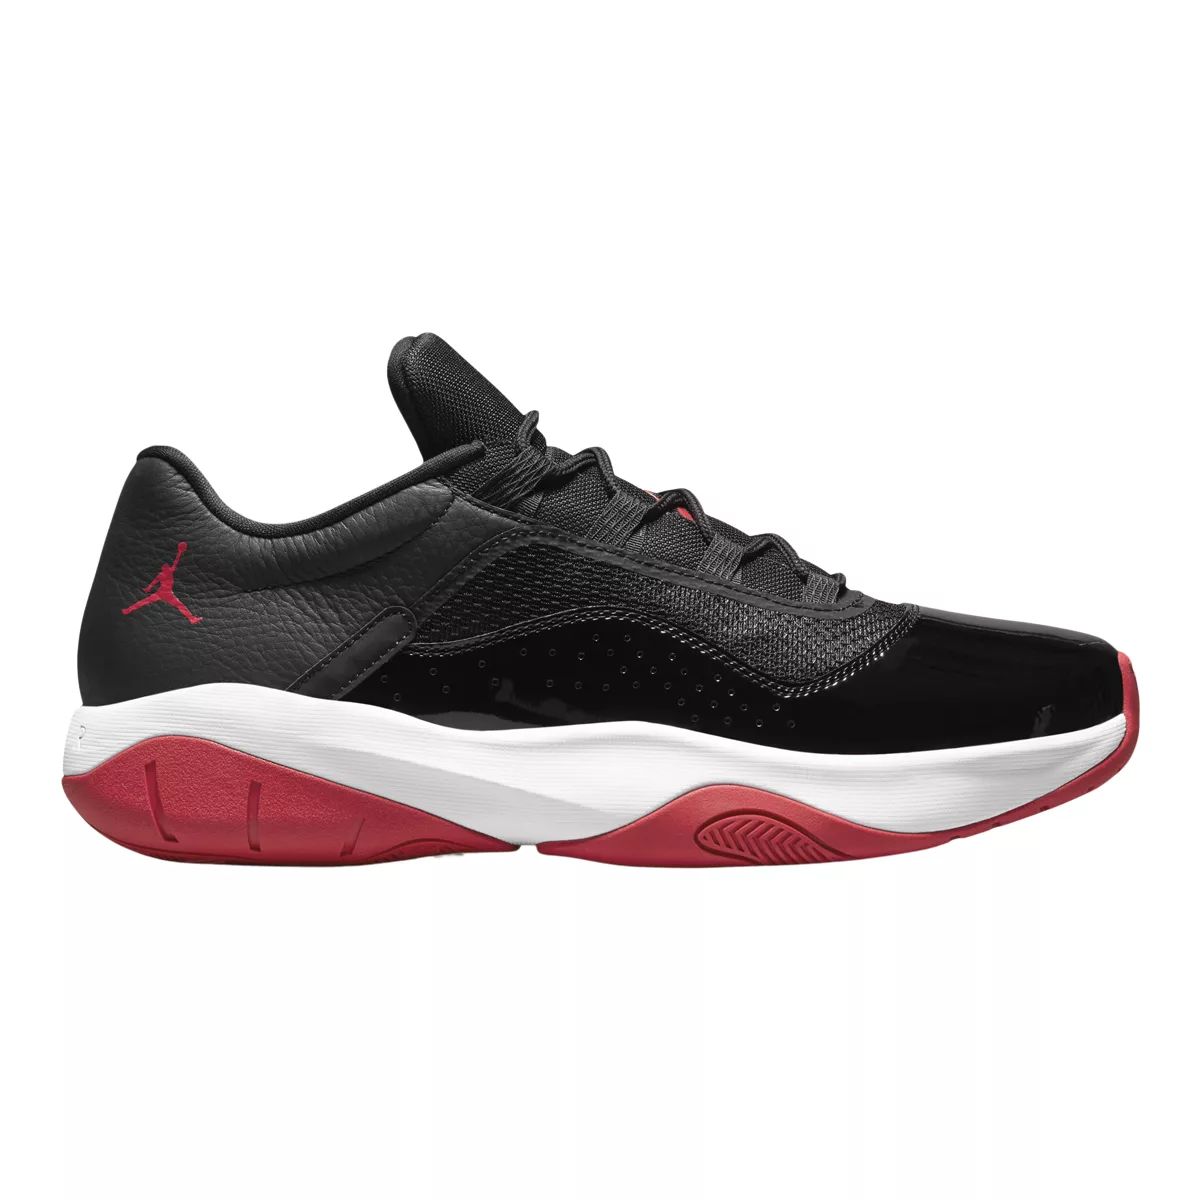 Nike Men's Air Jordan 11 Comfort Basketball Shoes  Low Top Leather Lightweight